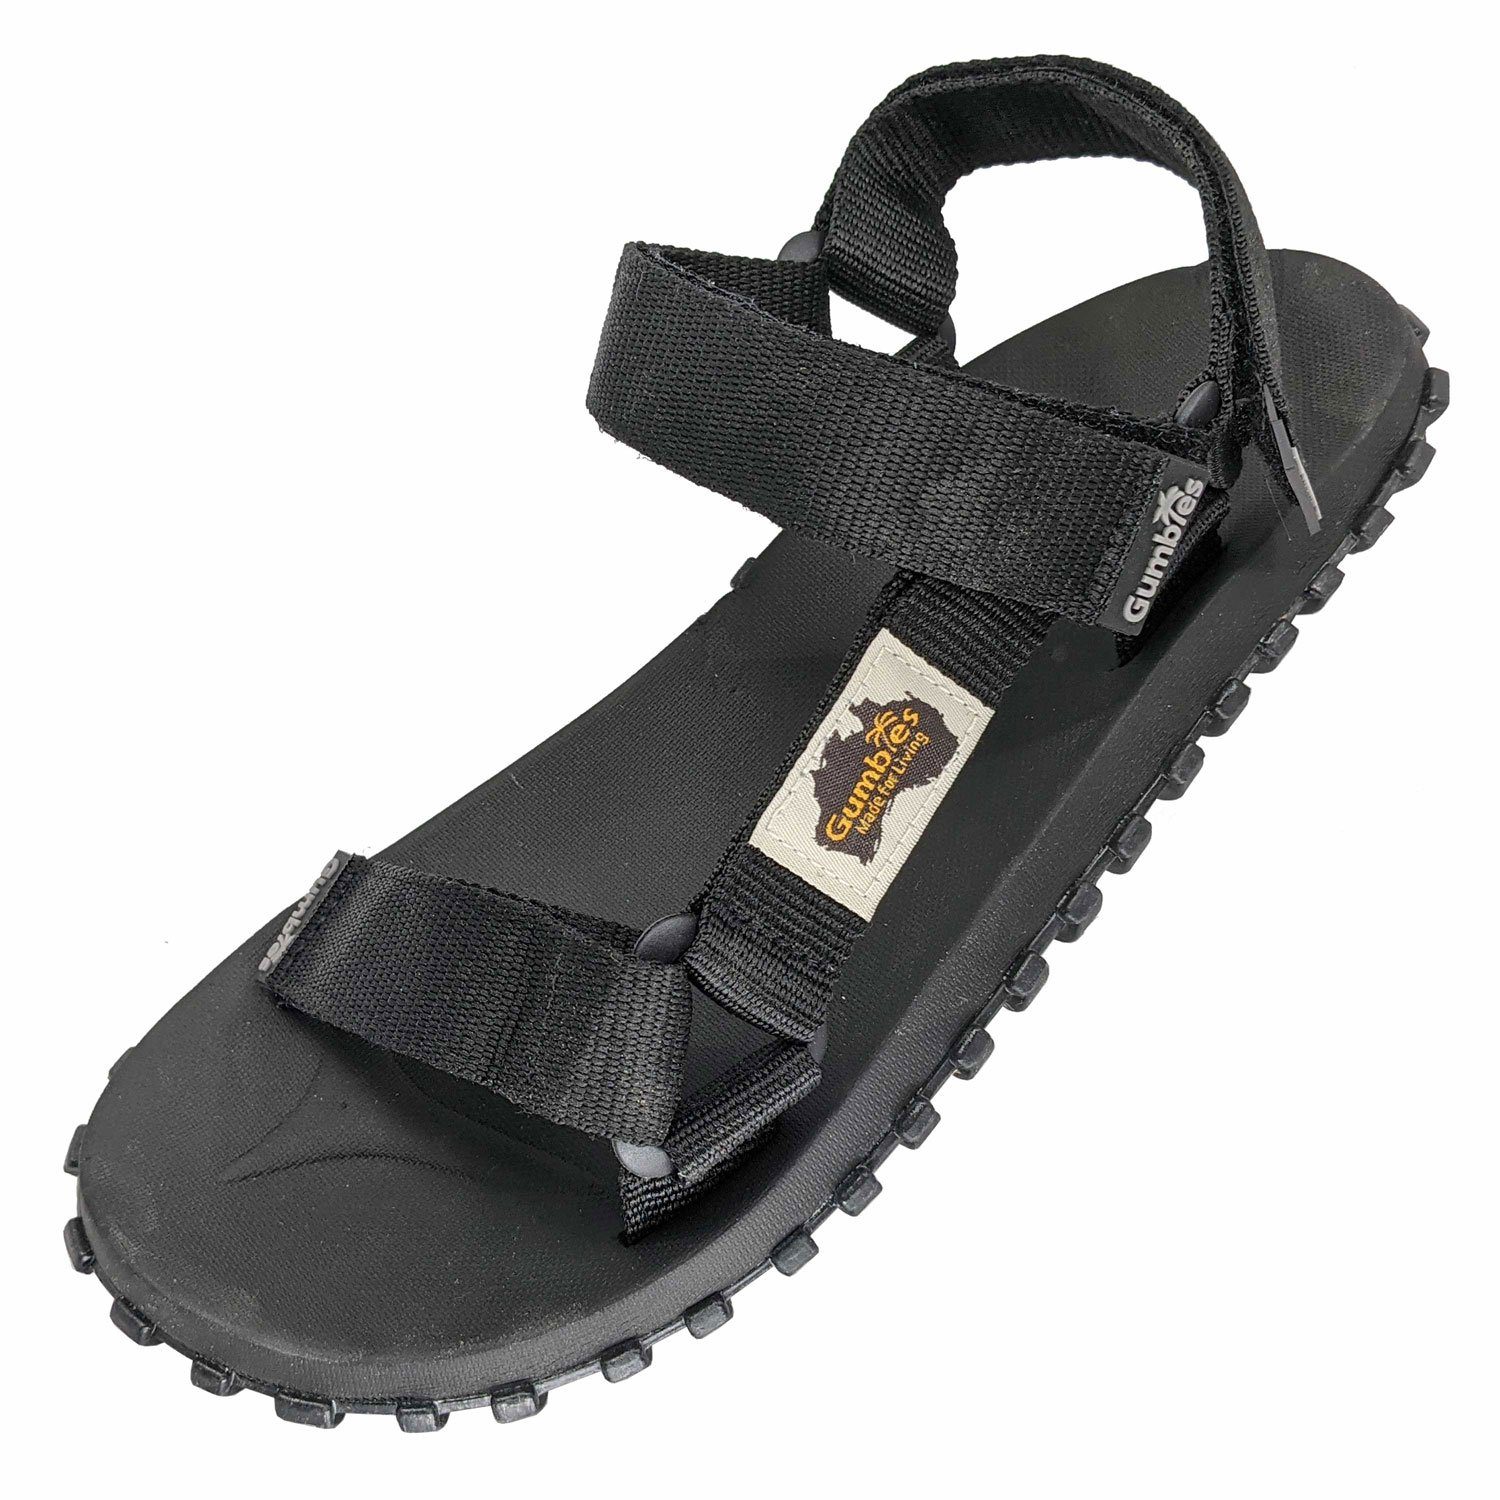 Schuhe  Gumbies Scrambler in Black Sandalette aus recycelten Materialien in farbenfrohen Designs